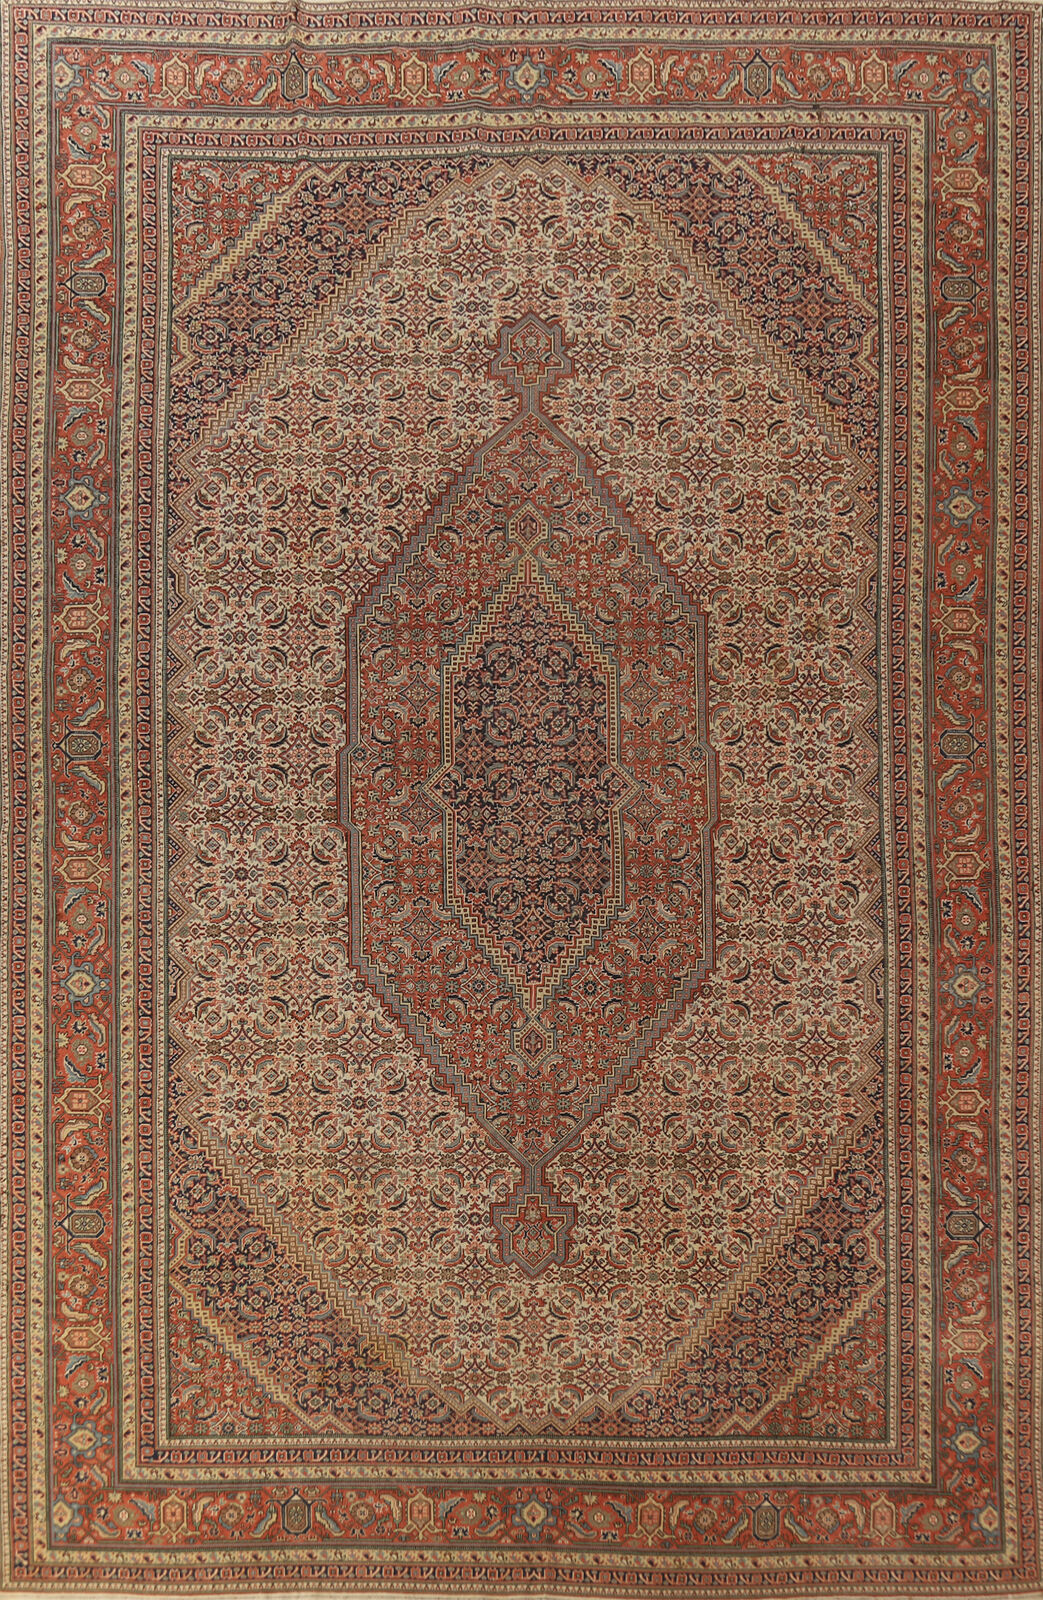 Pre-1900 Vegetable Dye Tebriz Antique Rug 9x13 Wool Hand-made Traditional Carpet